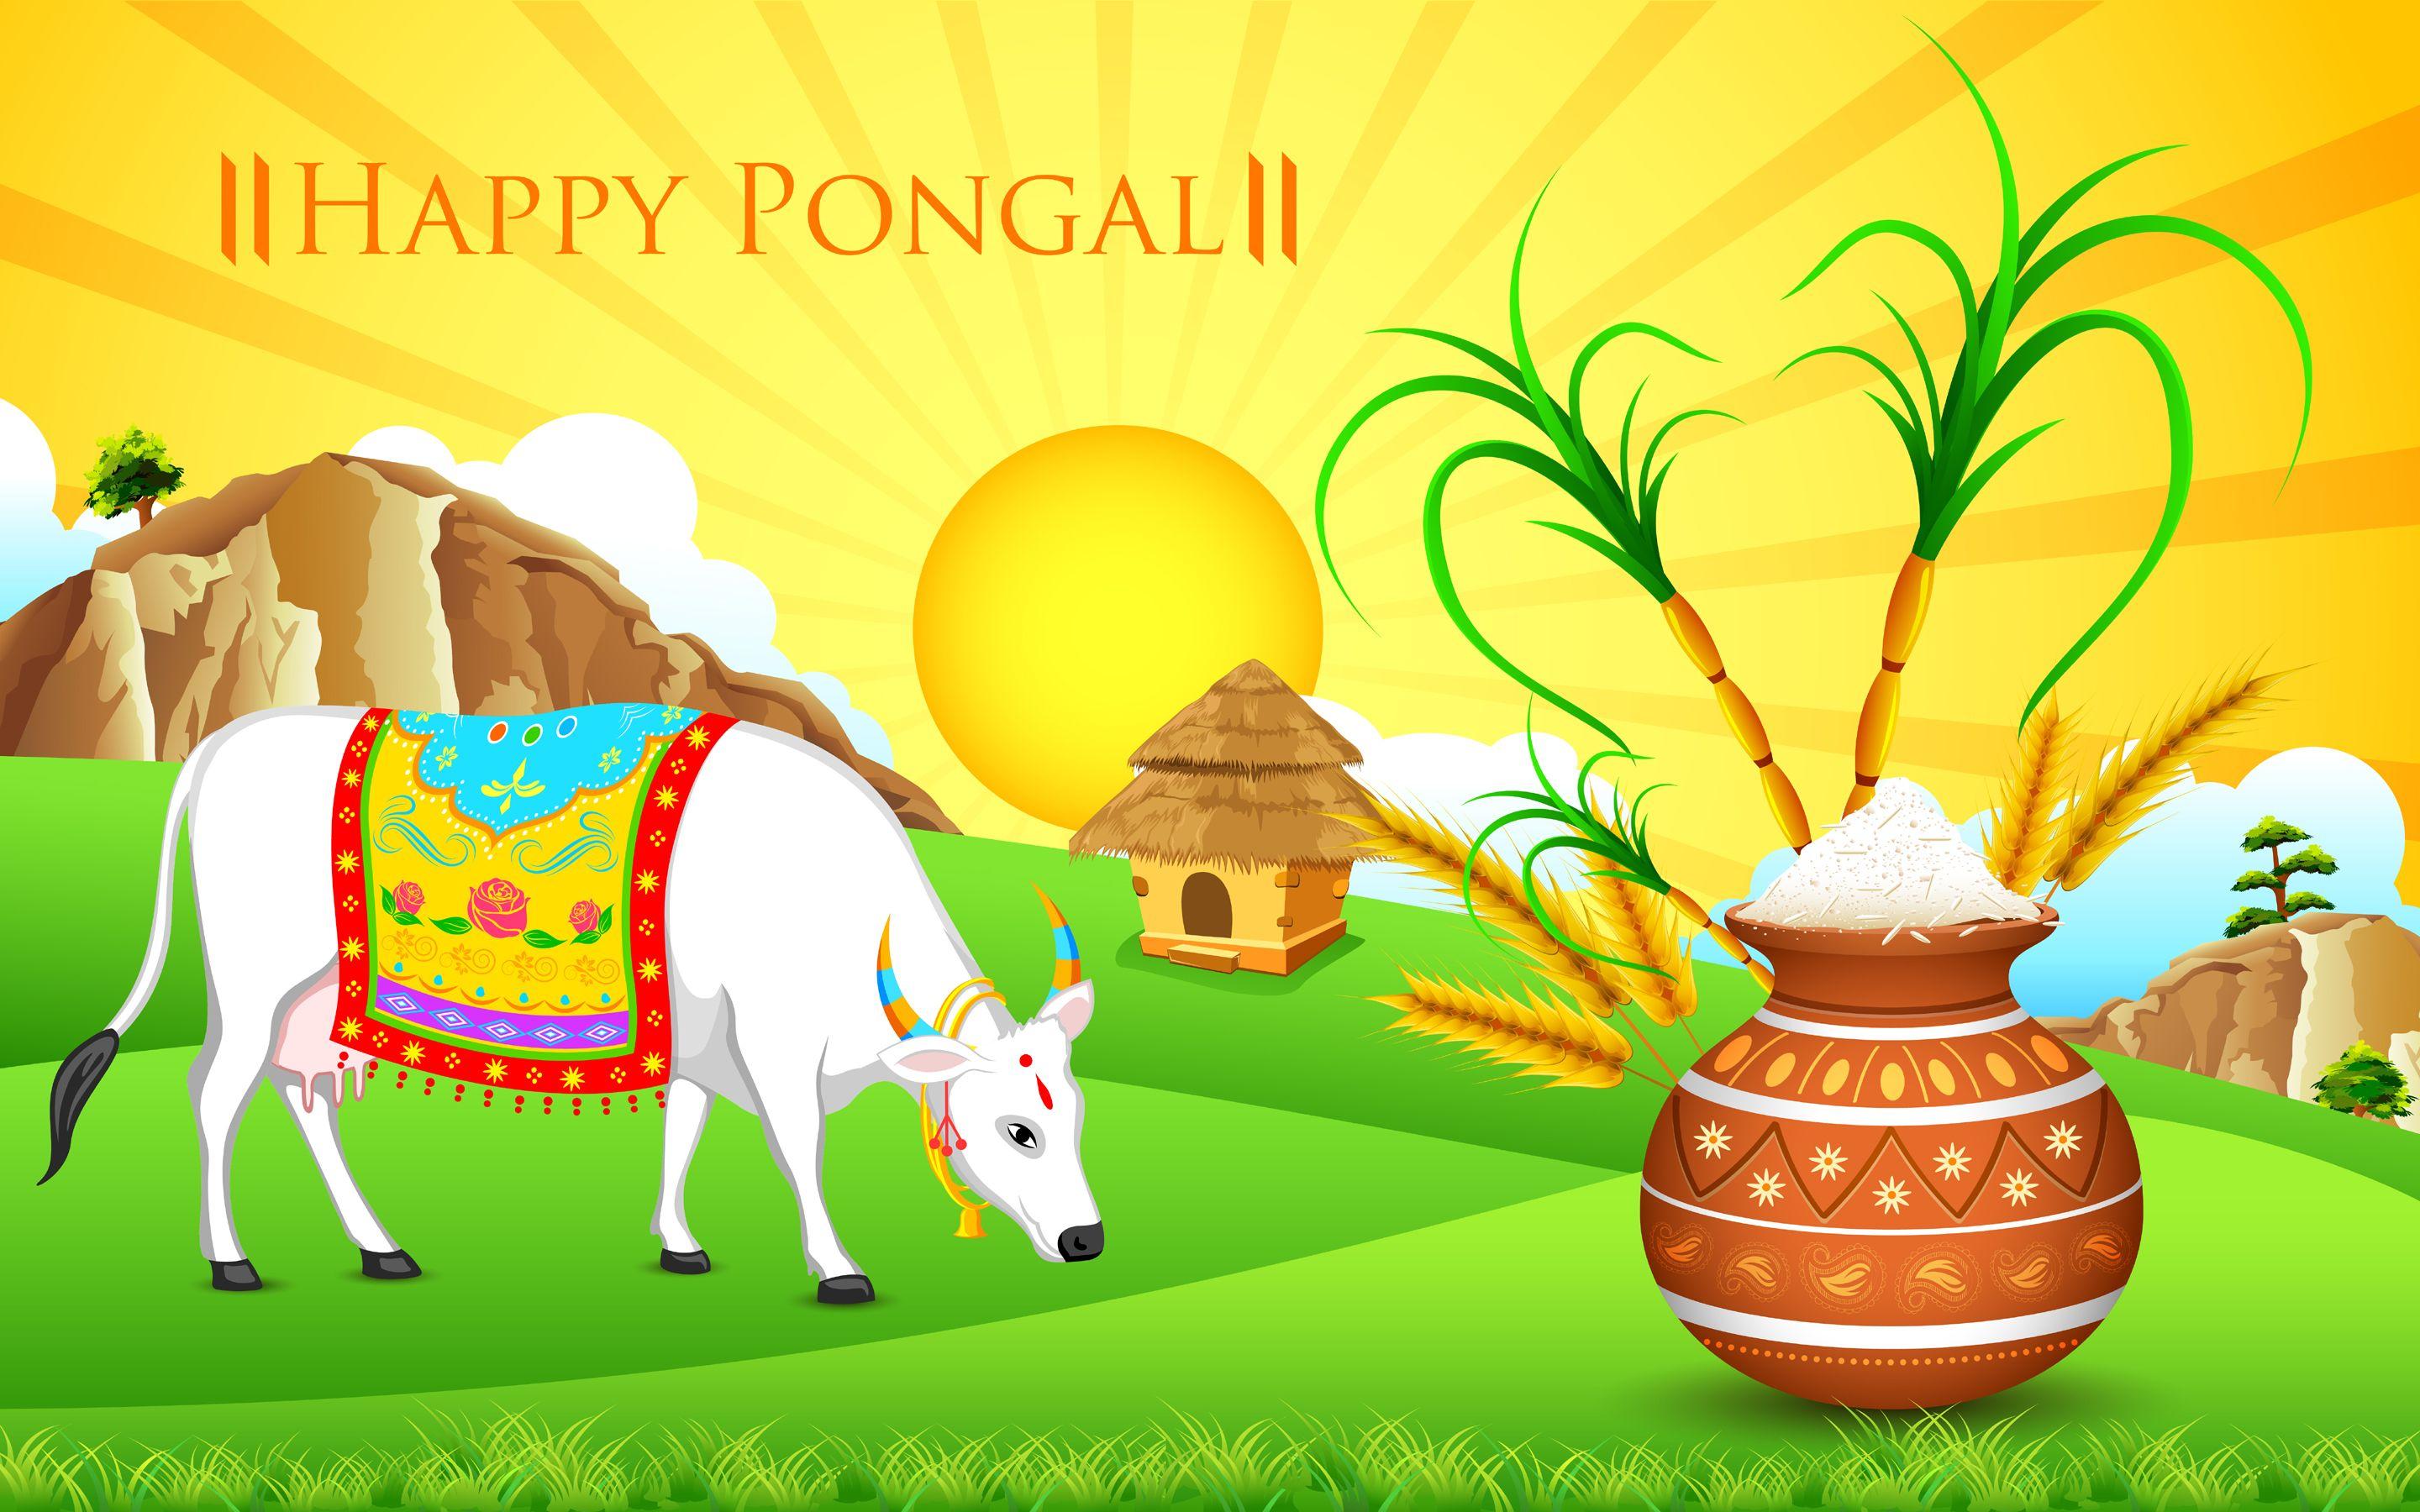 Happy Pongal Festival Wishes Lovely Desktop Wallpaper Pongal Image Download Wallpaper & Background Download